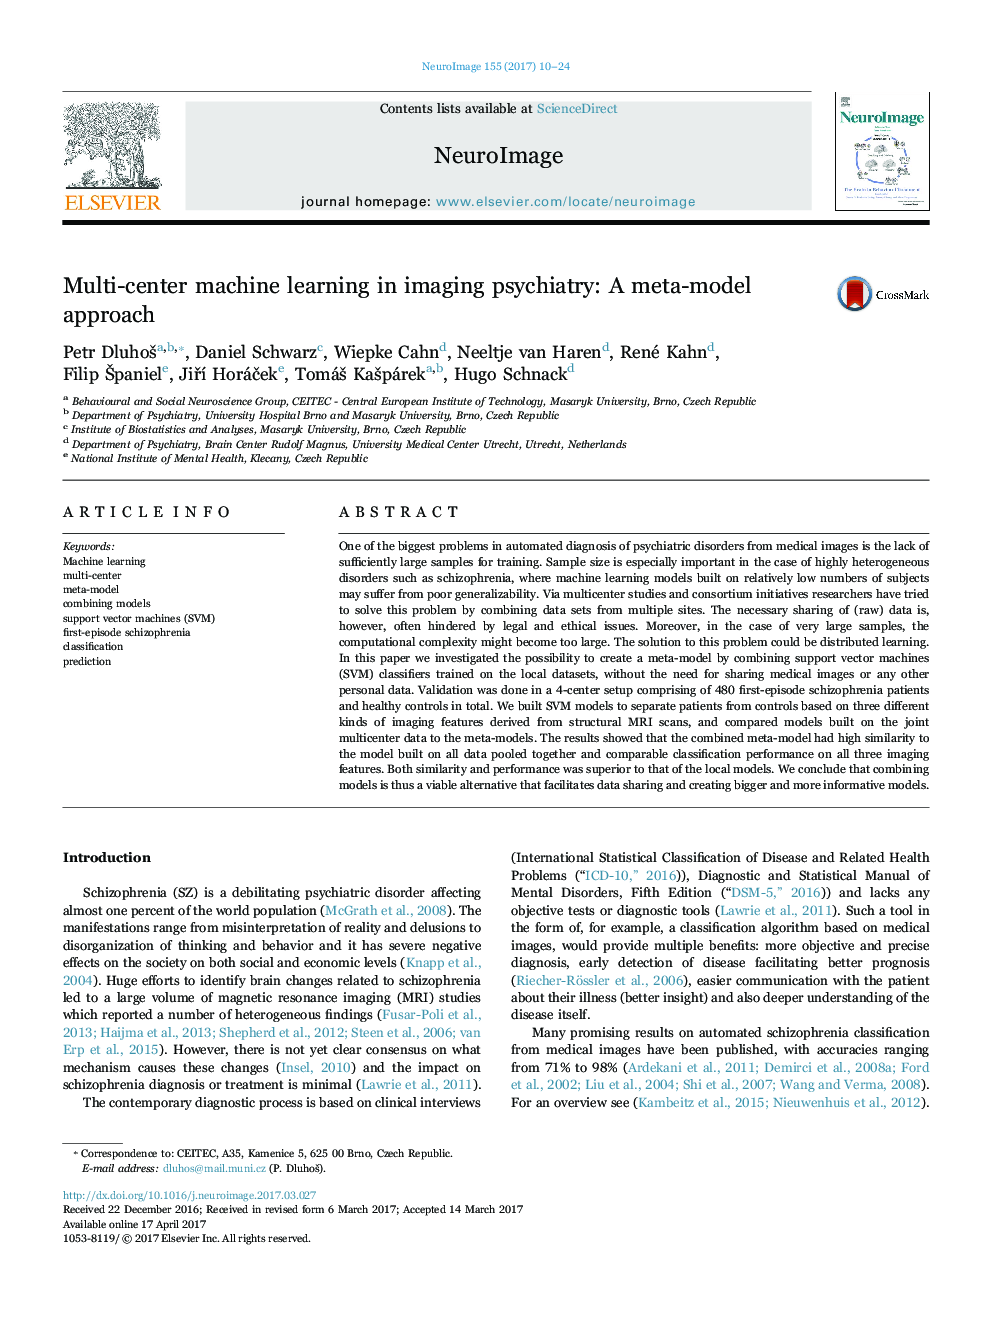 Multi-center machine learning in imaging psychiatry: A meta-model approach